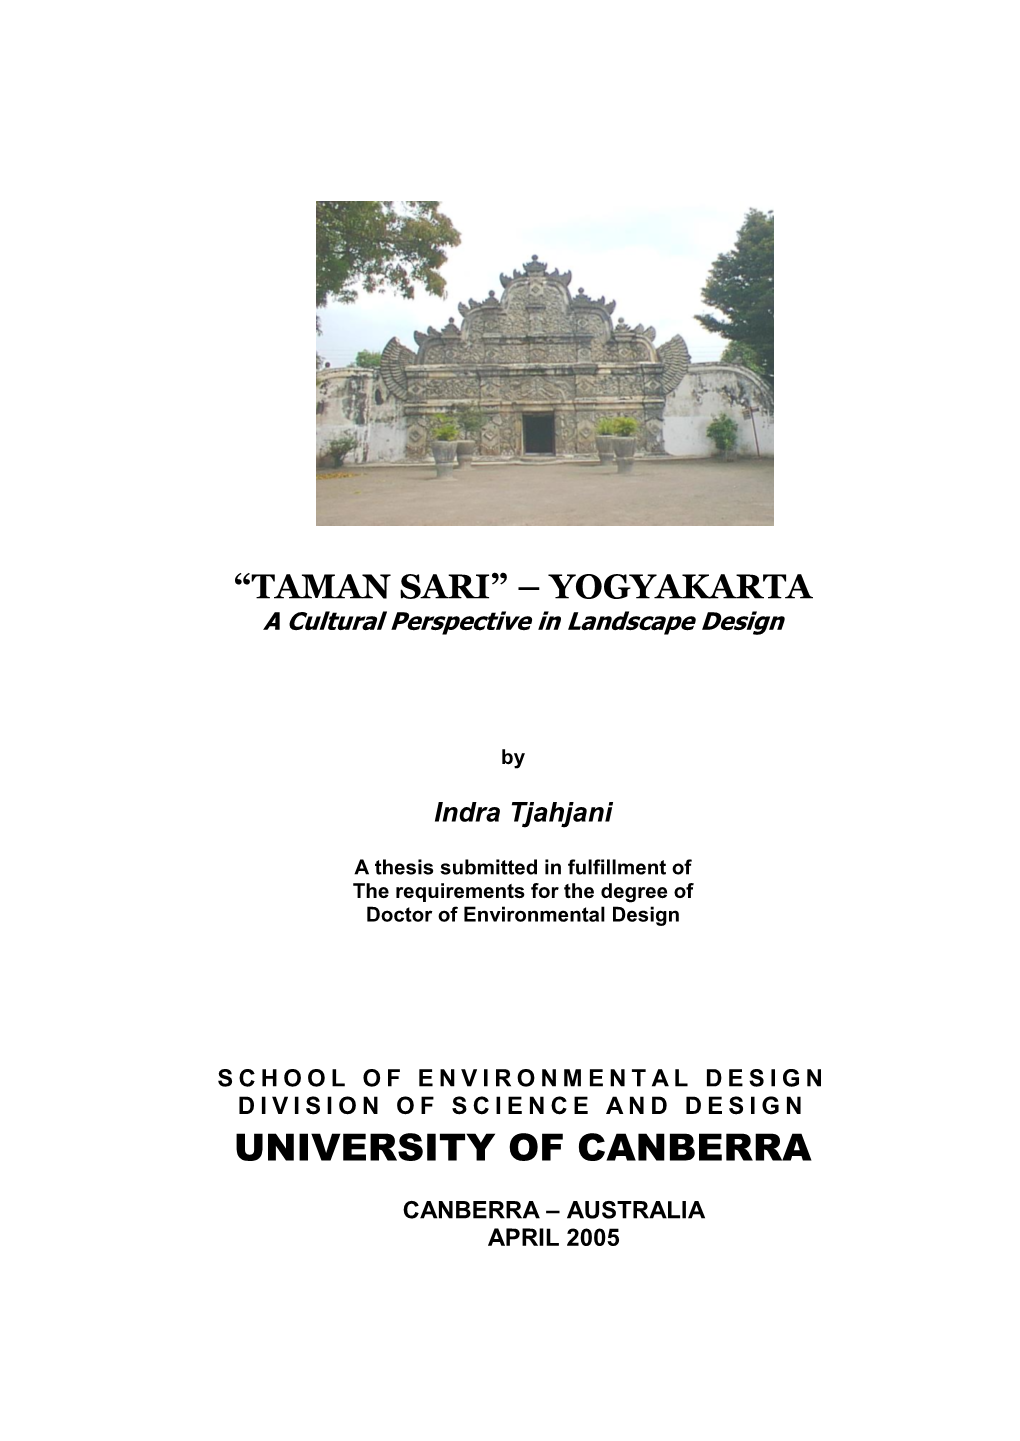 “TAMAN SARI” – YOGYAKARTA a Cultural Perspective in Landscape Design